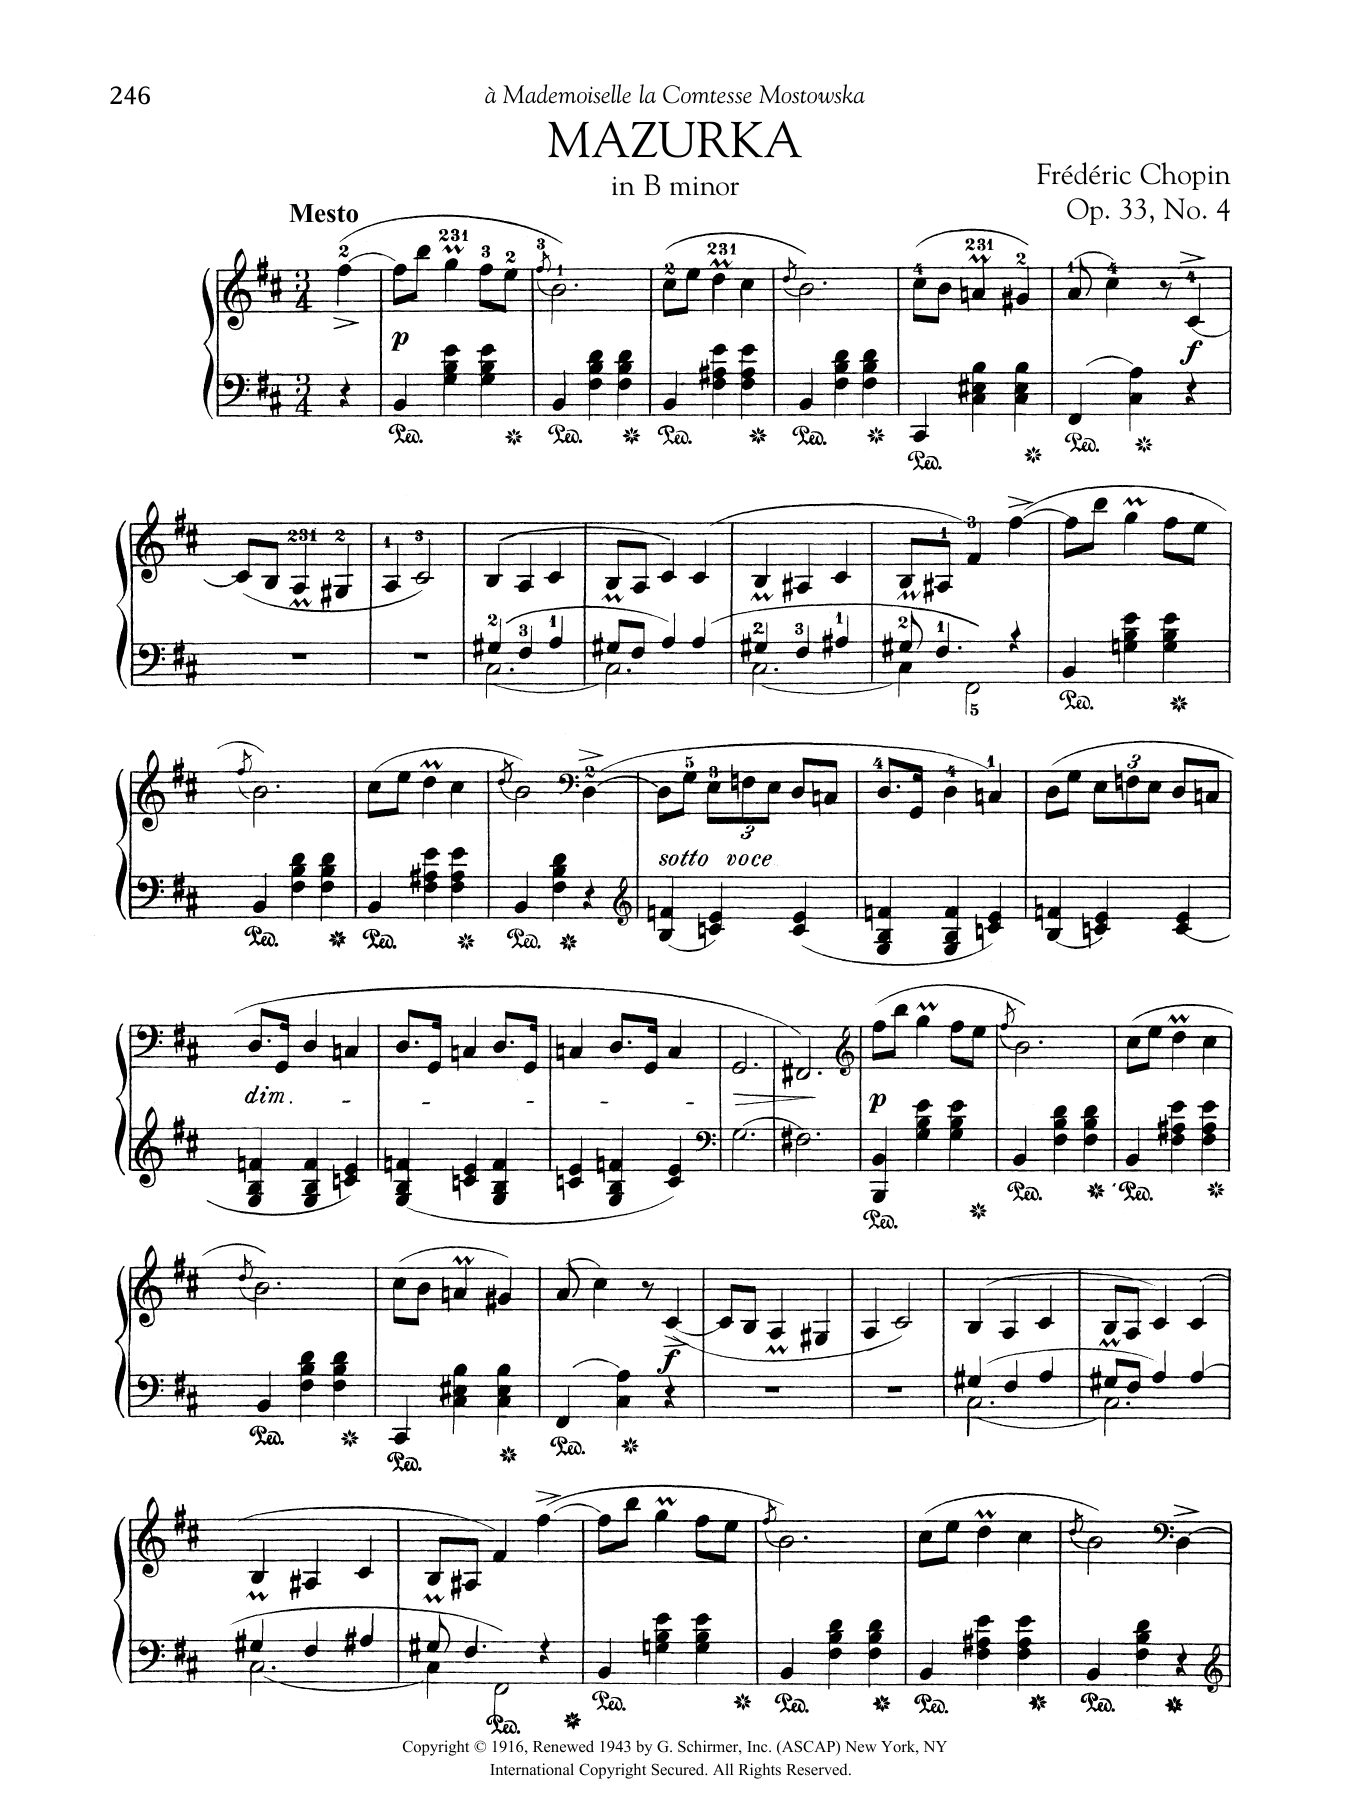 Mazurka in B minor, Op. 33, No. 4 sheet music